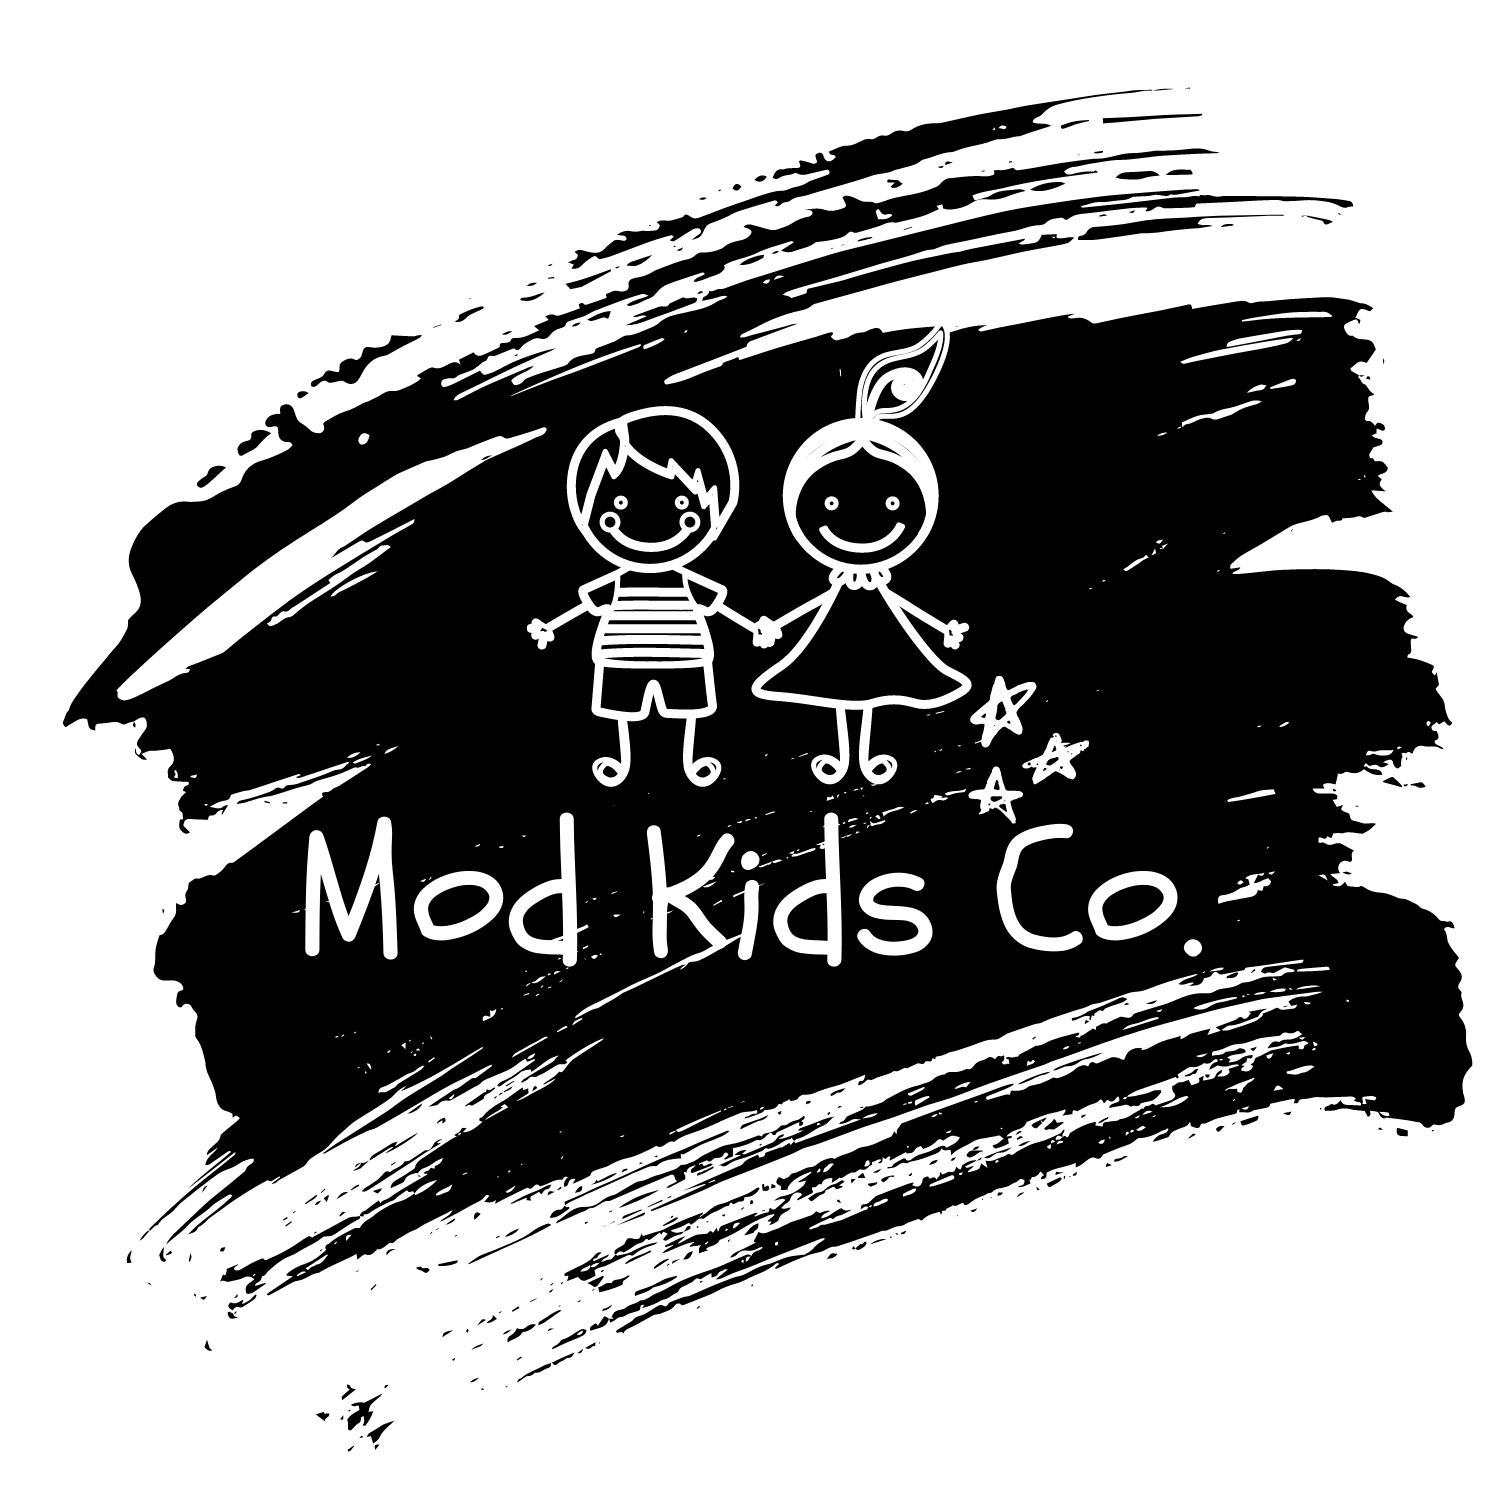 Mod Kids Co.